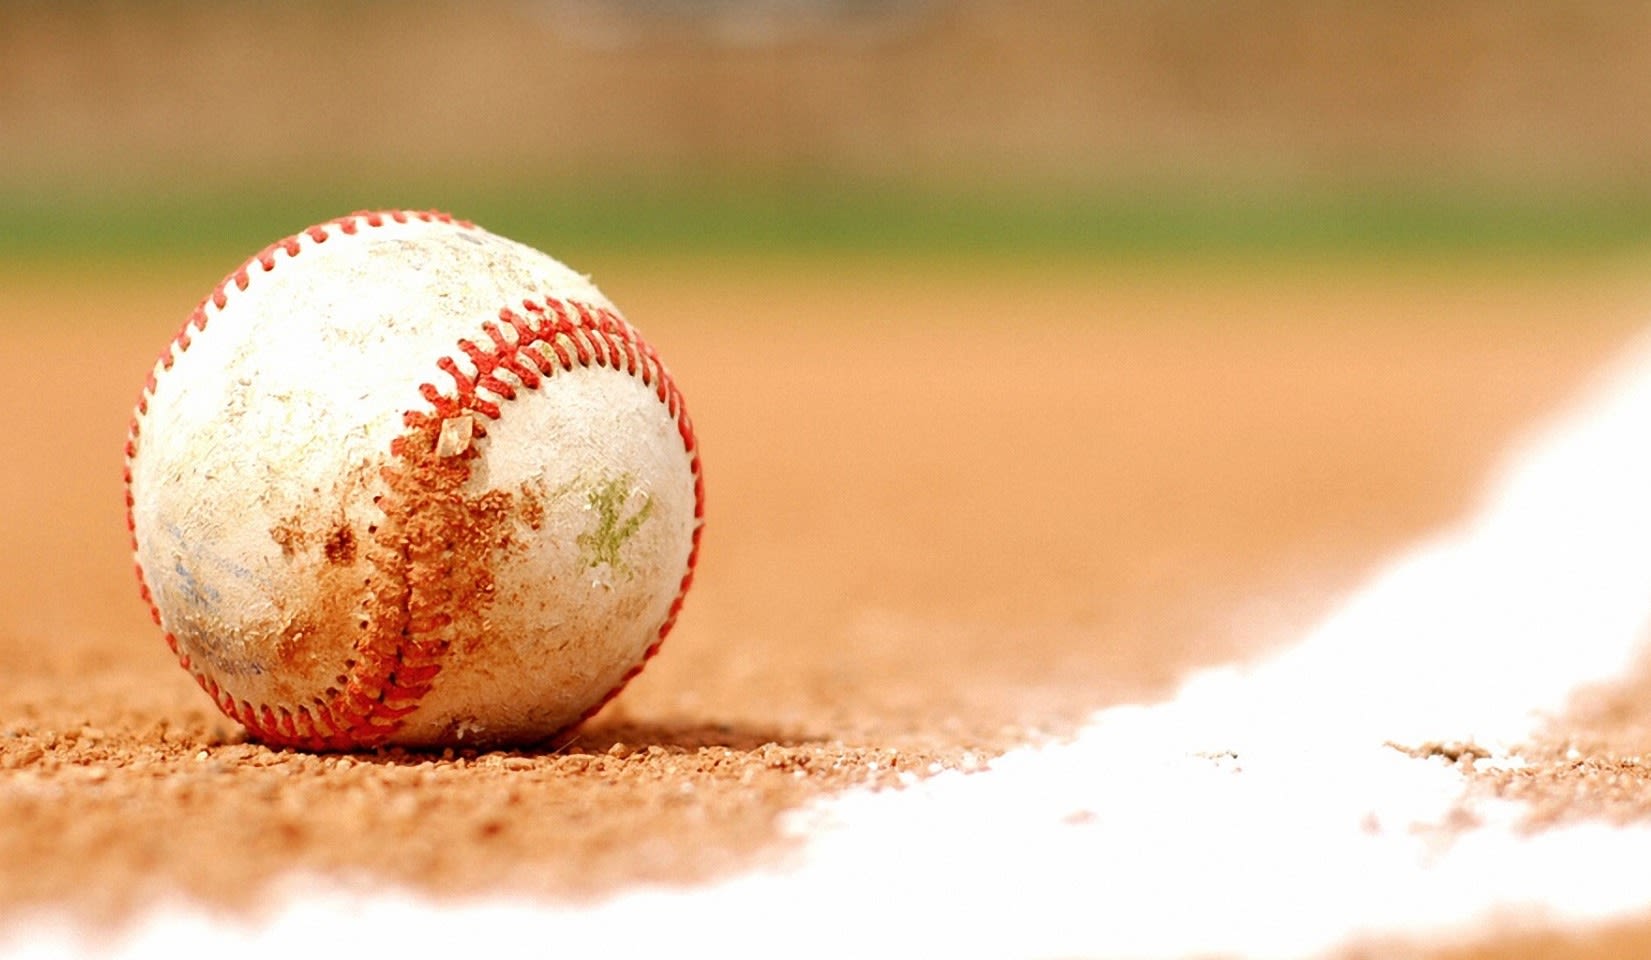 Arkansas Travelers baseball team selling ownership to Diamond Baseball Holdings - Talk Business & Politics